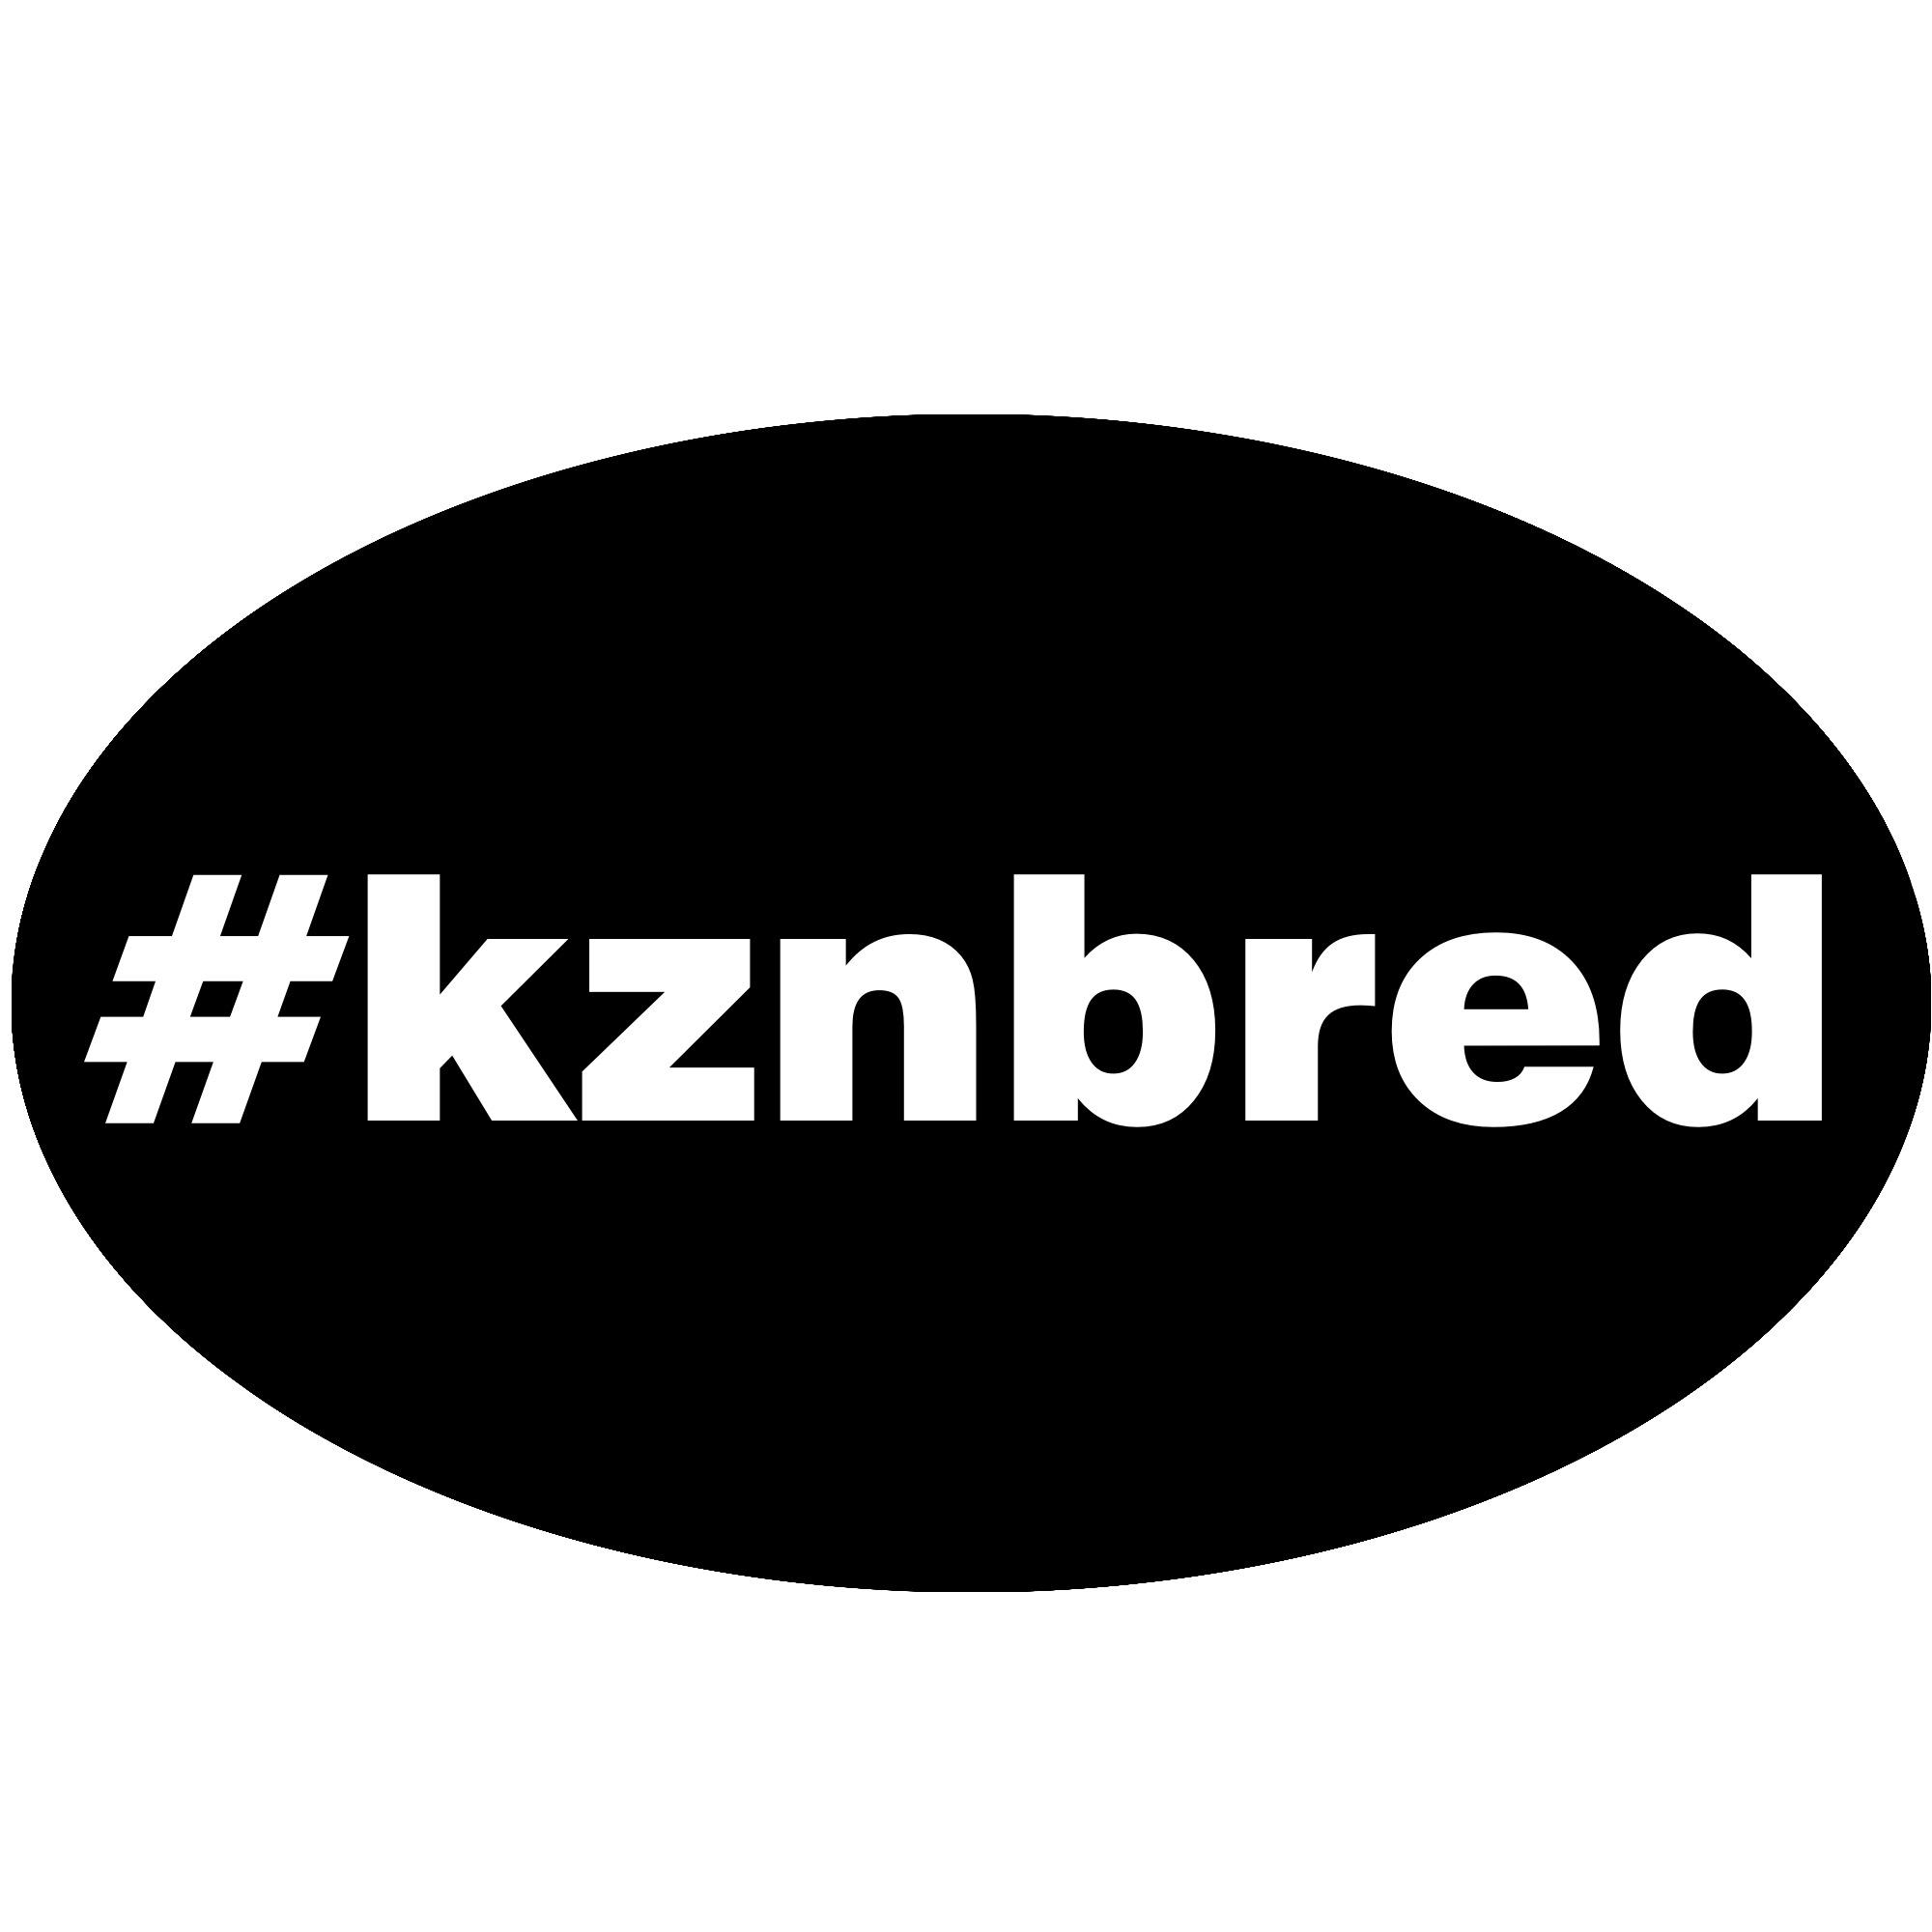 It’s That Time Of Year Again – The KZN Breeders Premium Scheme Kicks In